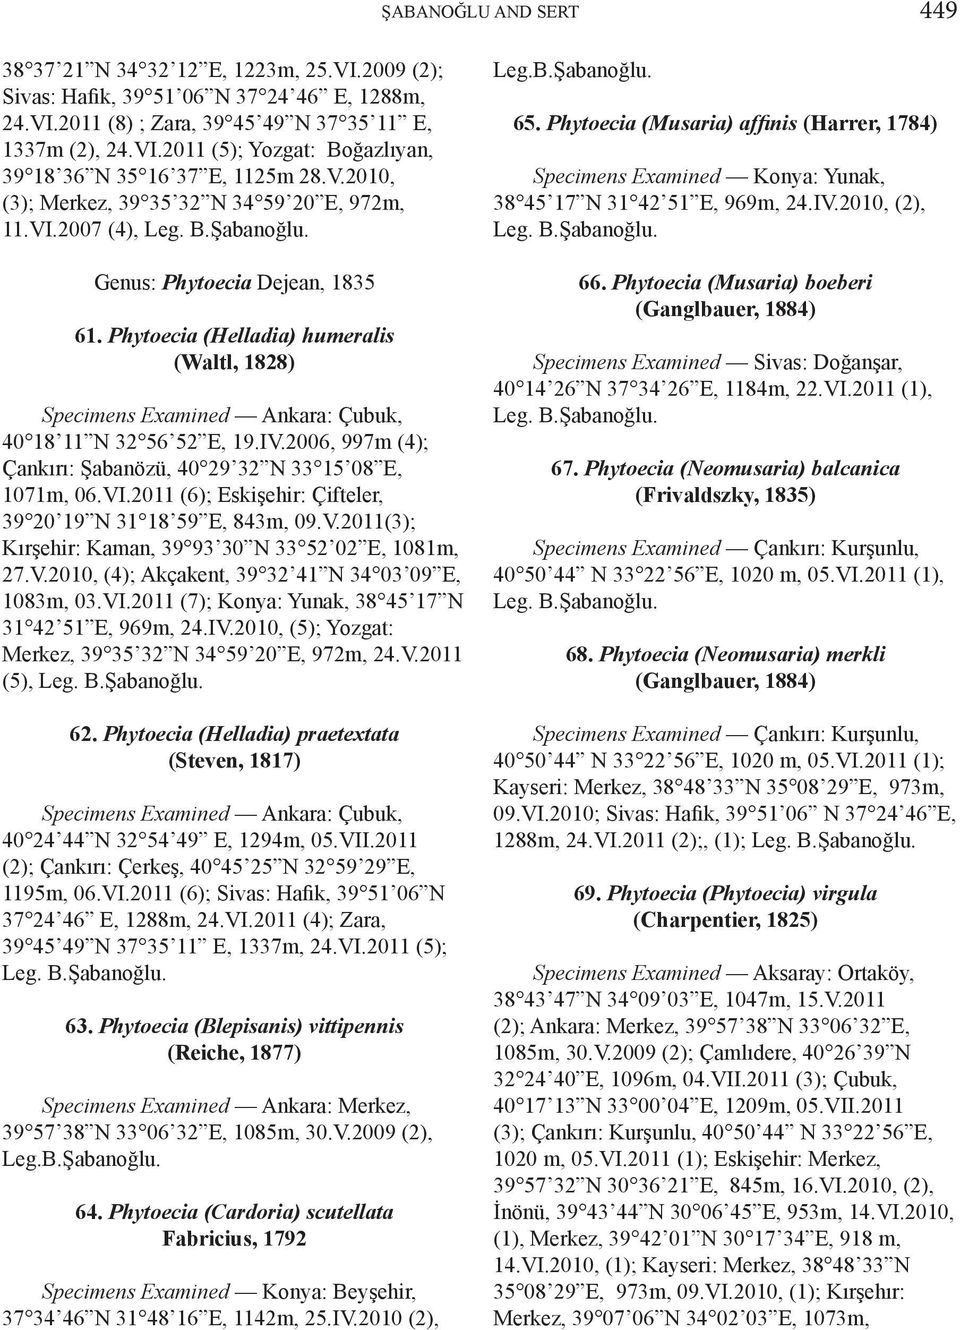 Phytoecia (Helladia) humeralis (Waltl, 1828) Specimens Examined Ankara: Çubuk, 40 18 11 N 32 56 52 E, 19.IV.2006, 997m (4); Çankırı: Şabanözü, 40 29 32 N 33 15 08 E, 1071m, 06.VI.